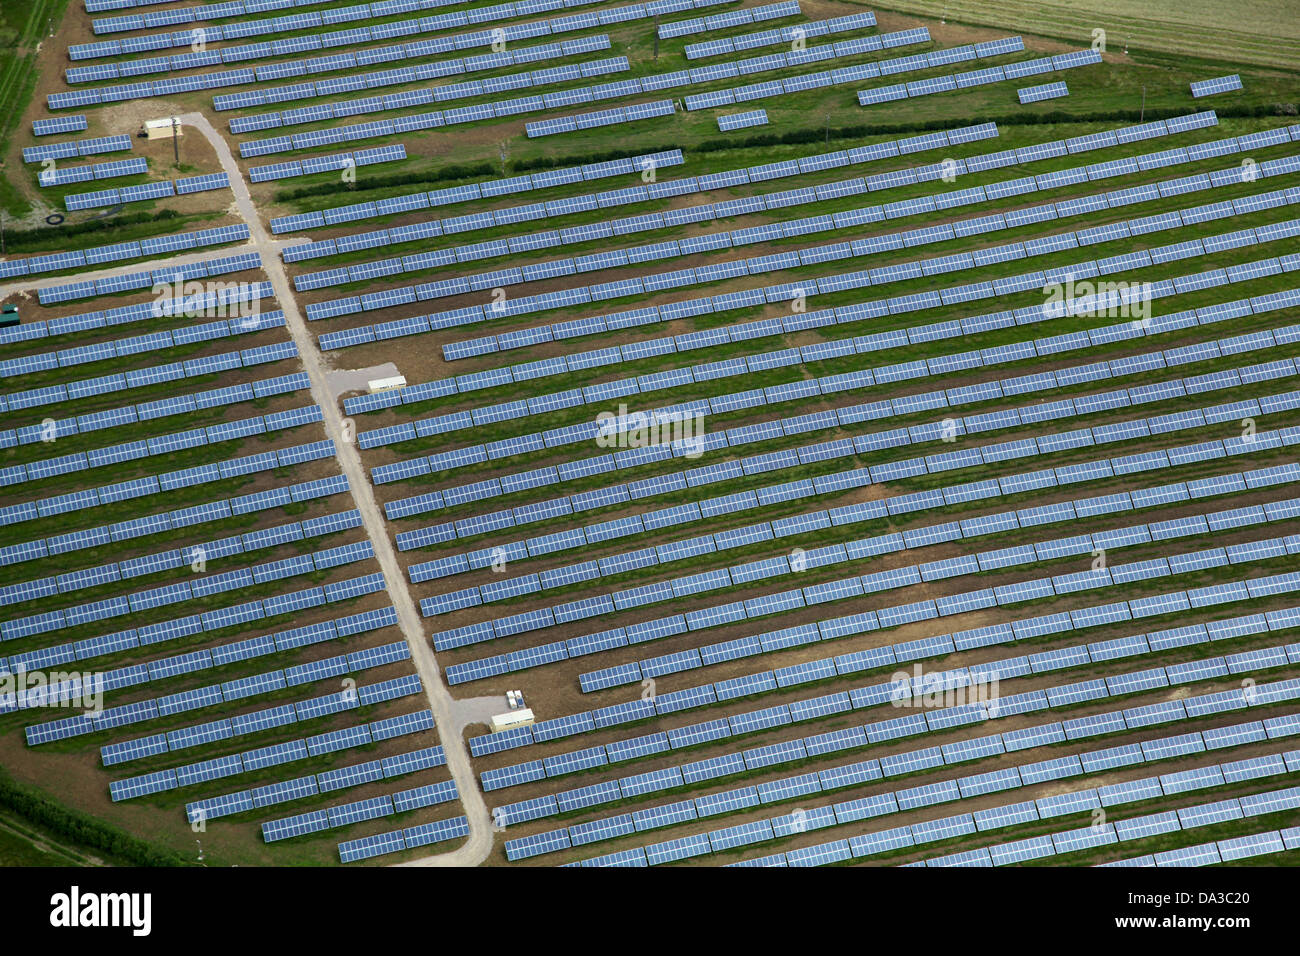 Vista aérea de una granja solar - un campo de paneles solares Foto de stock